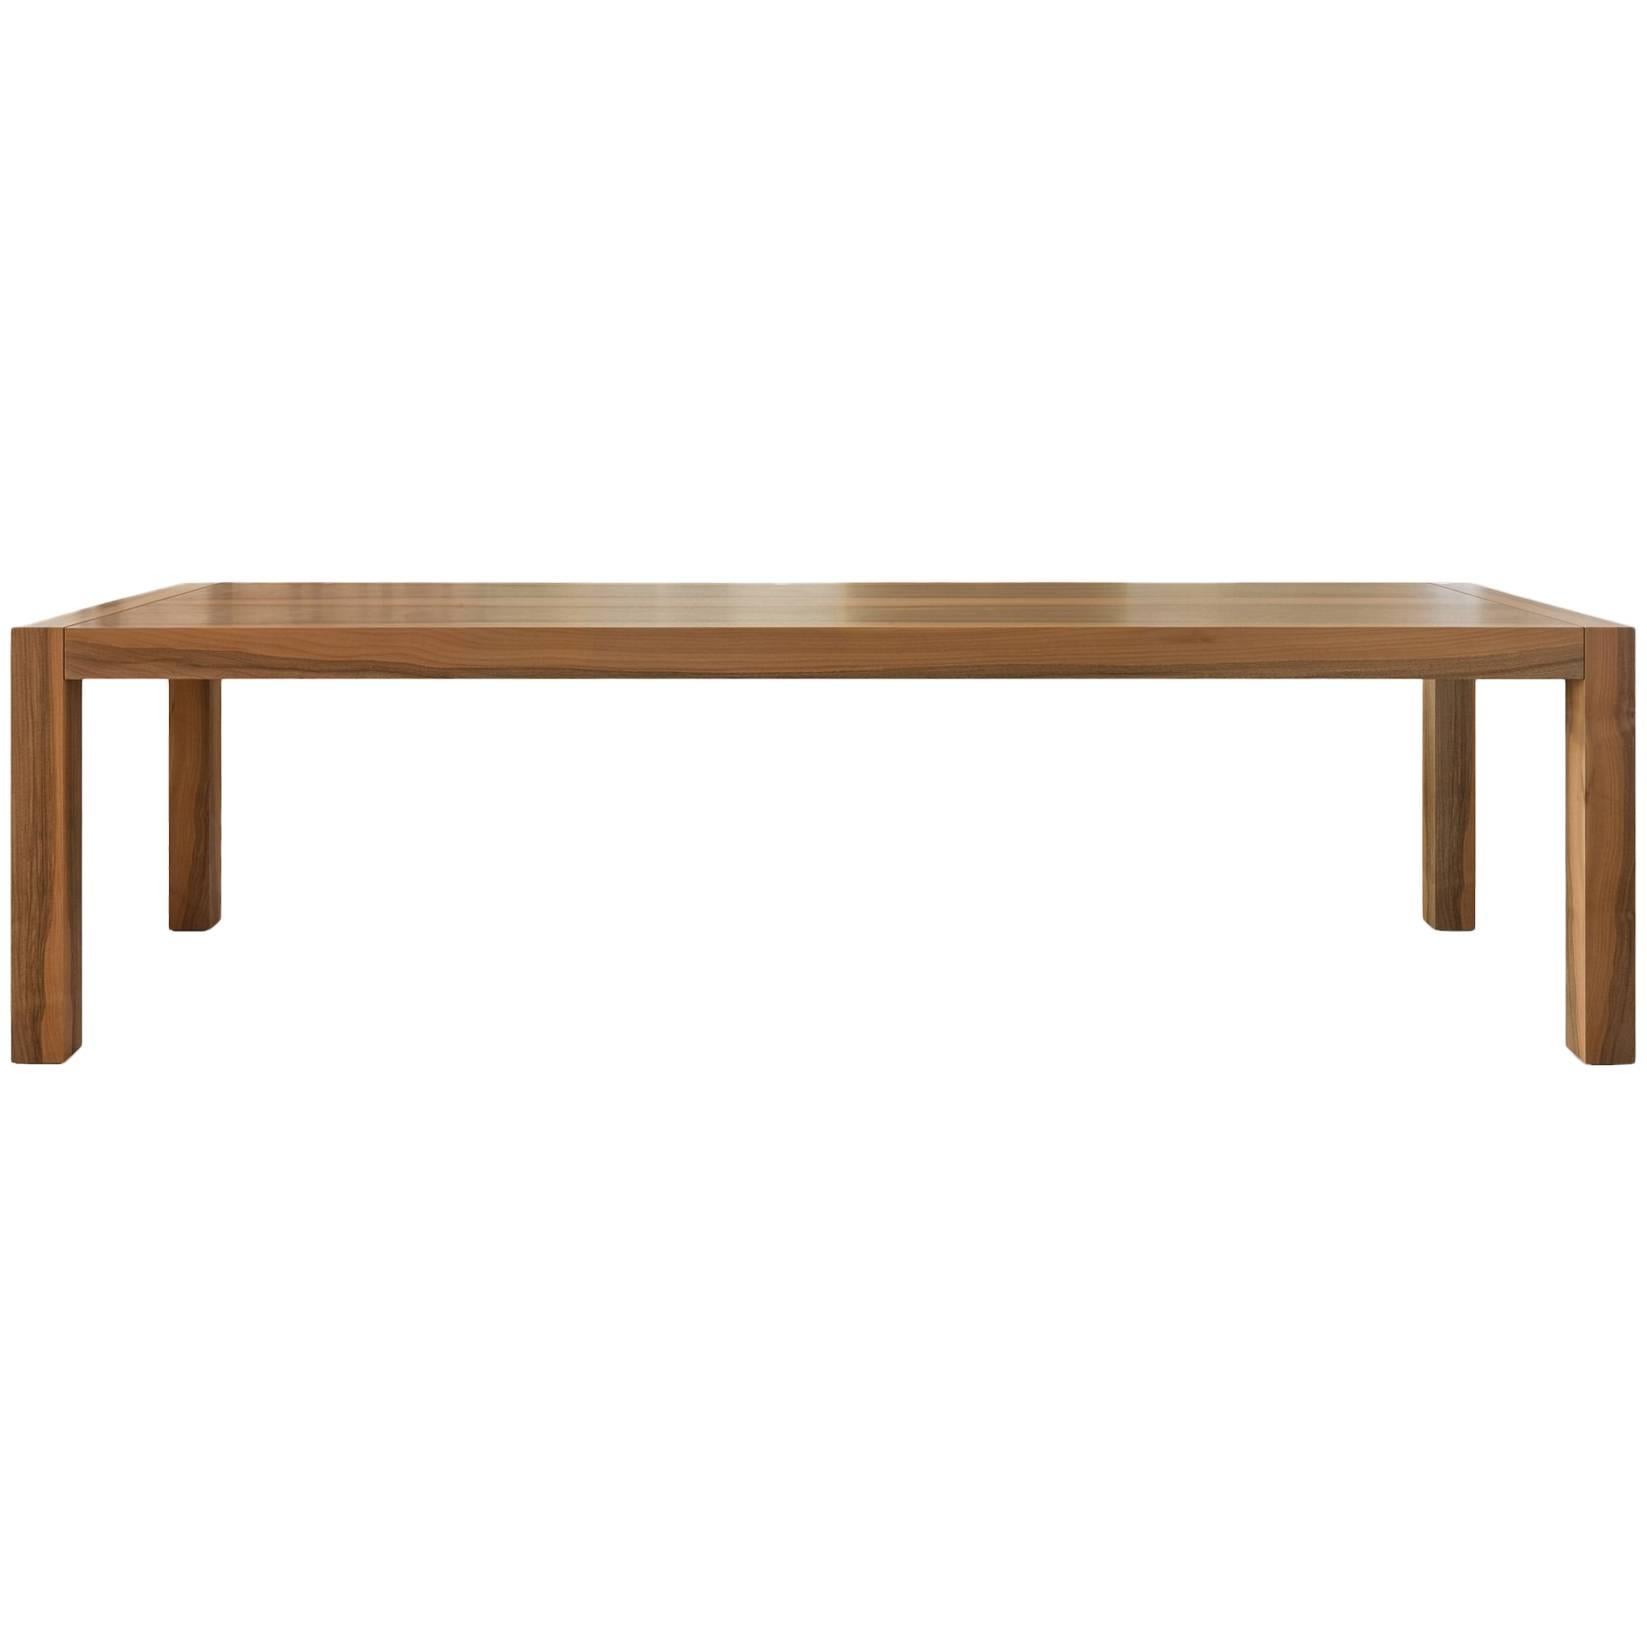 "Kwaak" Wooden Rectangular Table Designed by Stephane Lebrun for Dessie For Sale